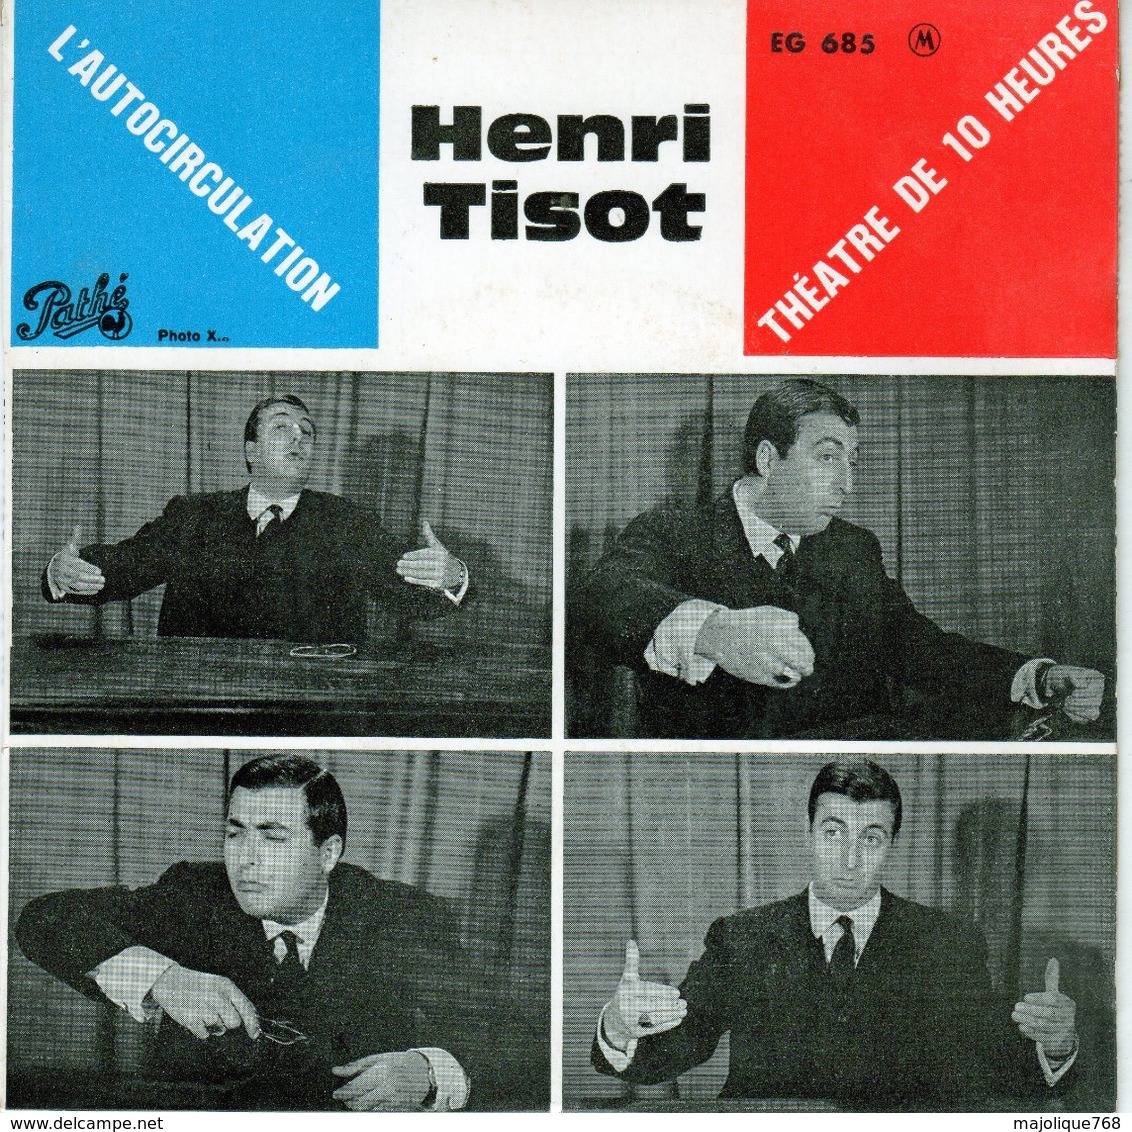 Henri Tisot - L'Autocirculation - Pathé EG 685 - 1962 - Cómica